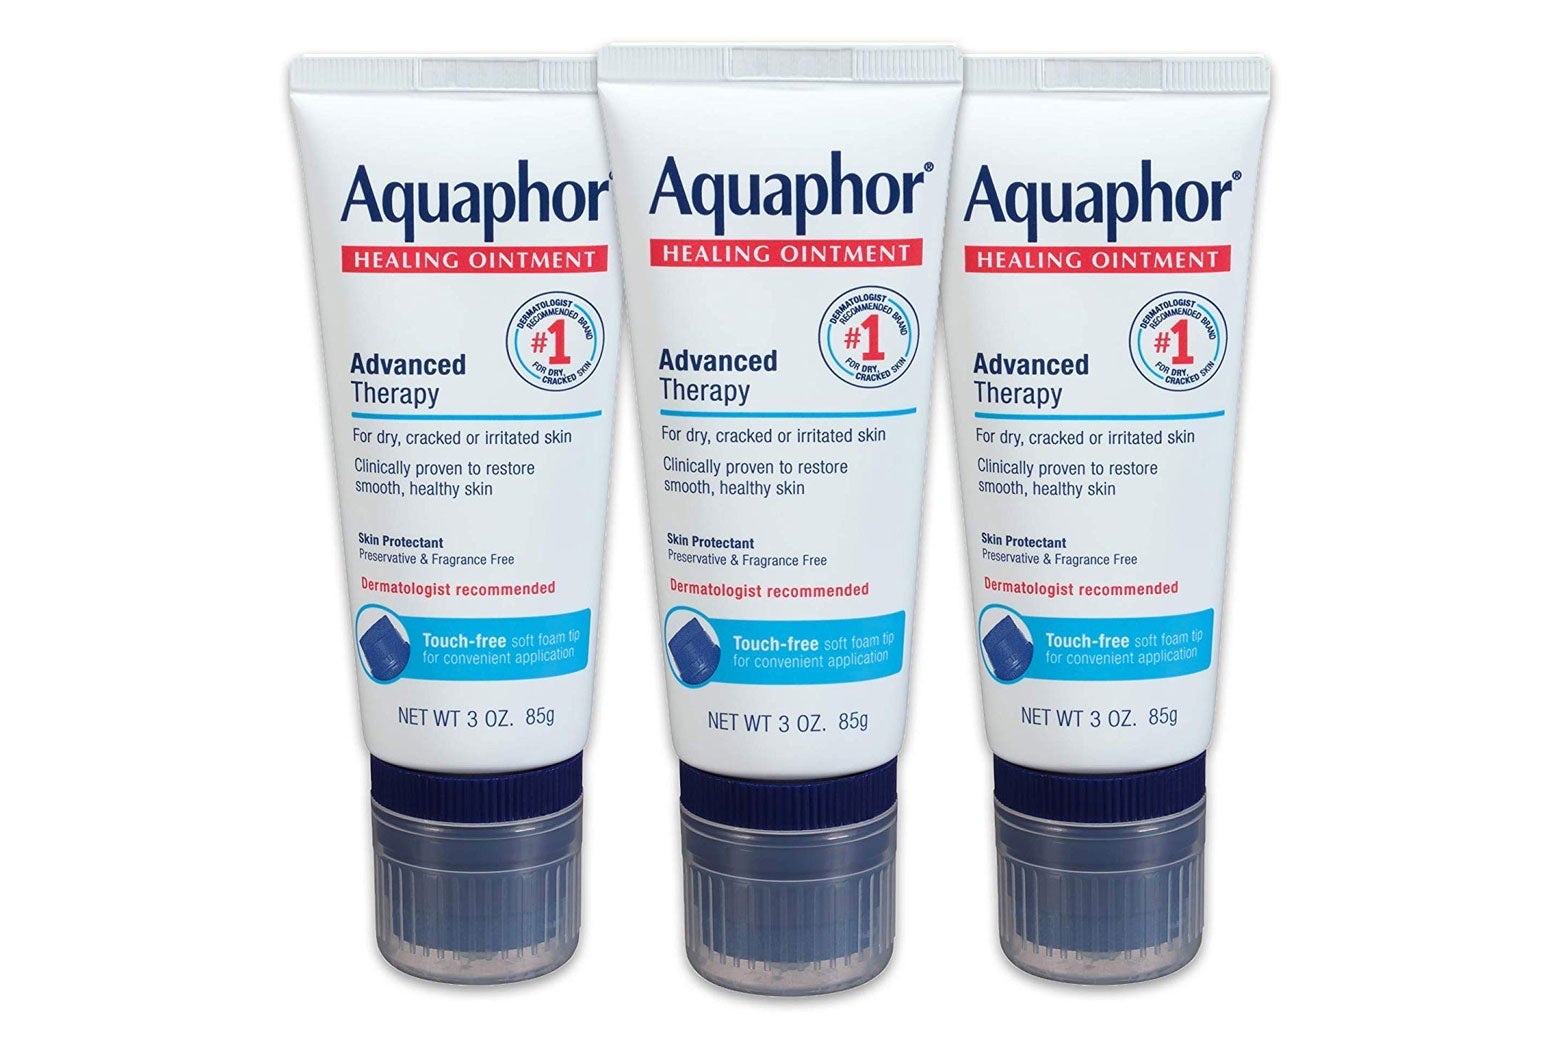 Three bottles of Aquaphor lotion.